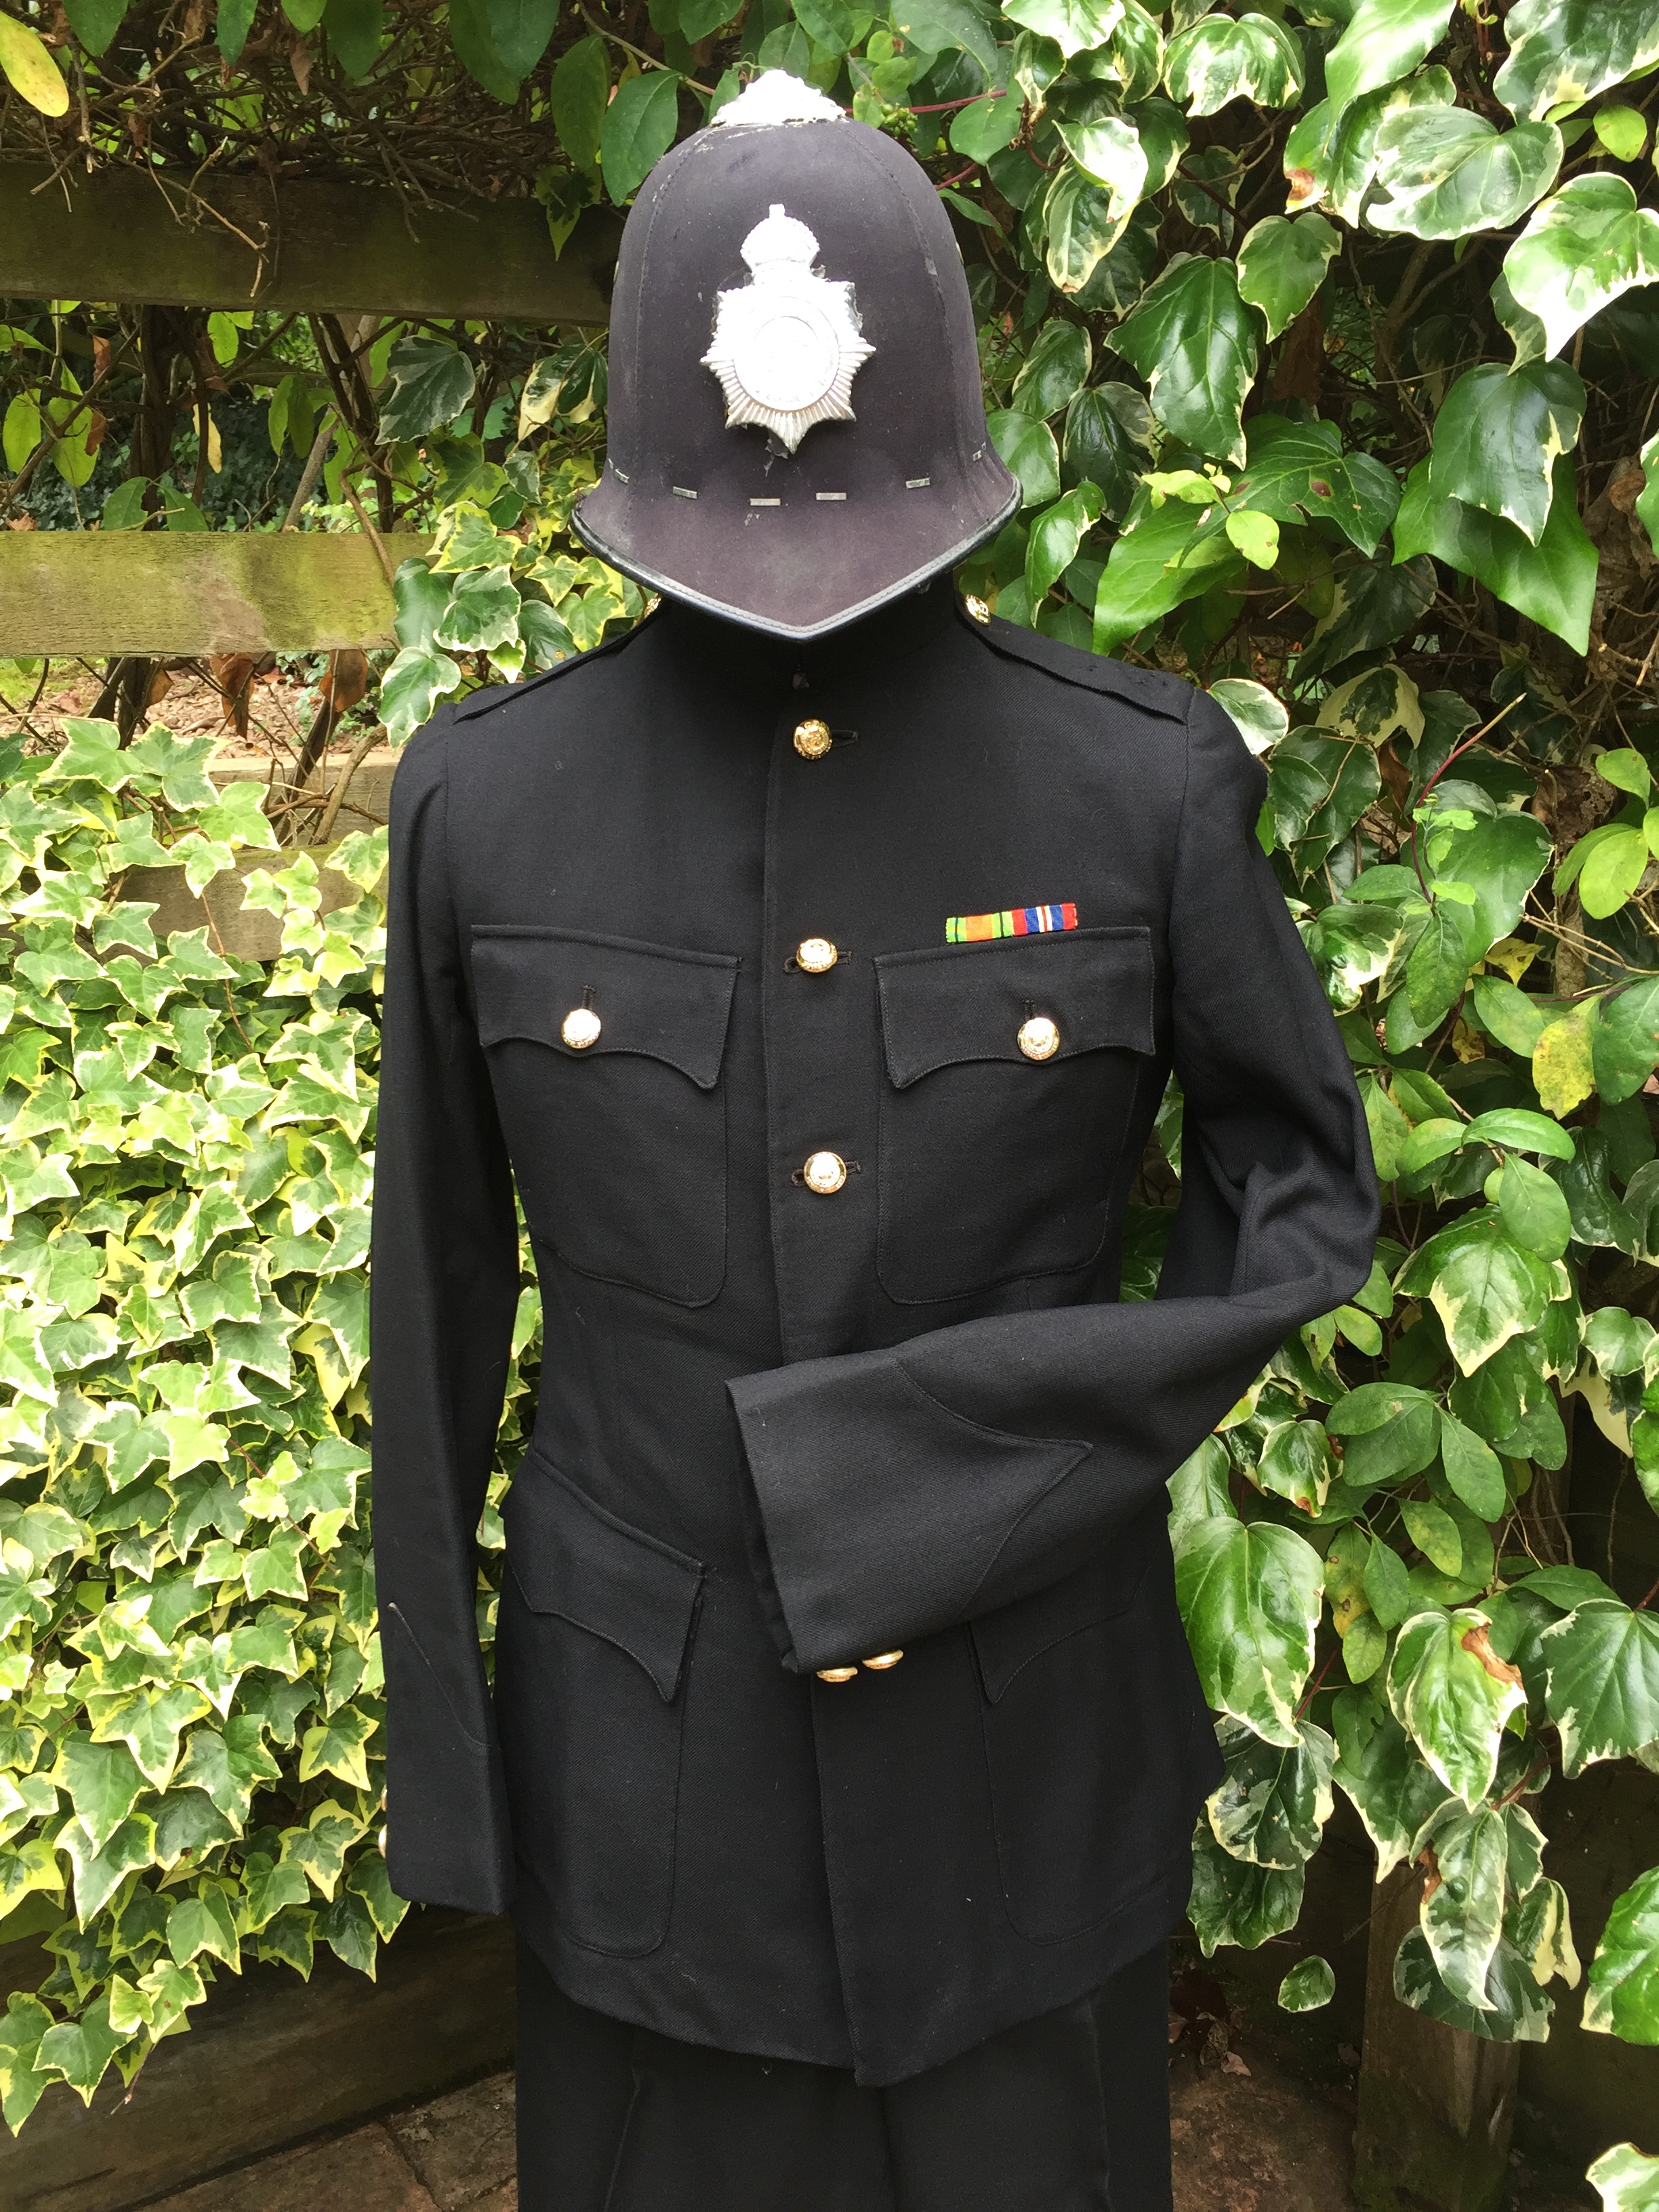 New Zealand Police uniform